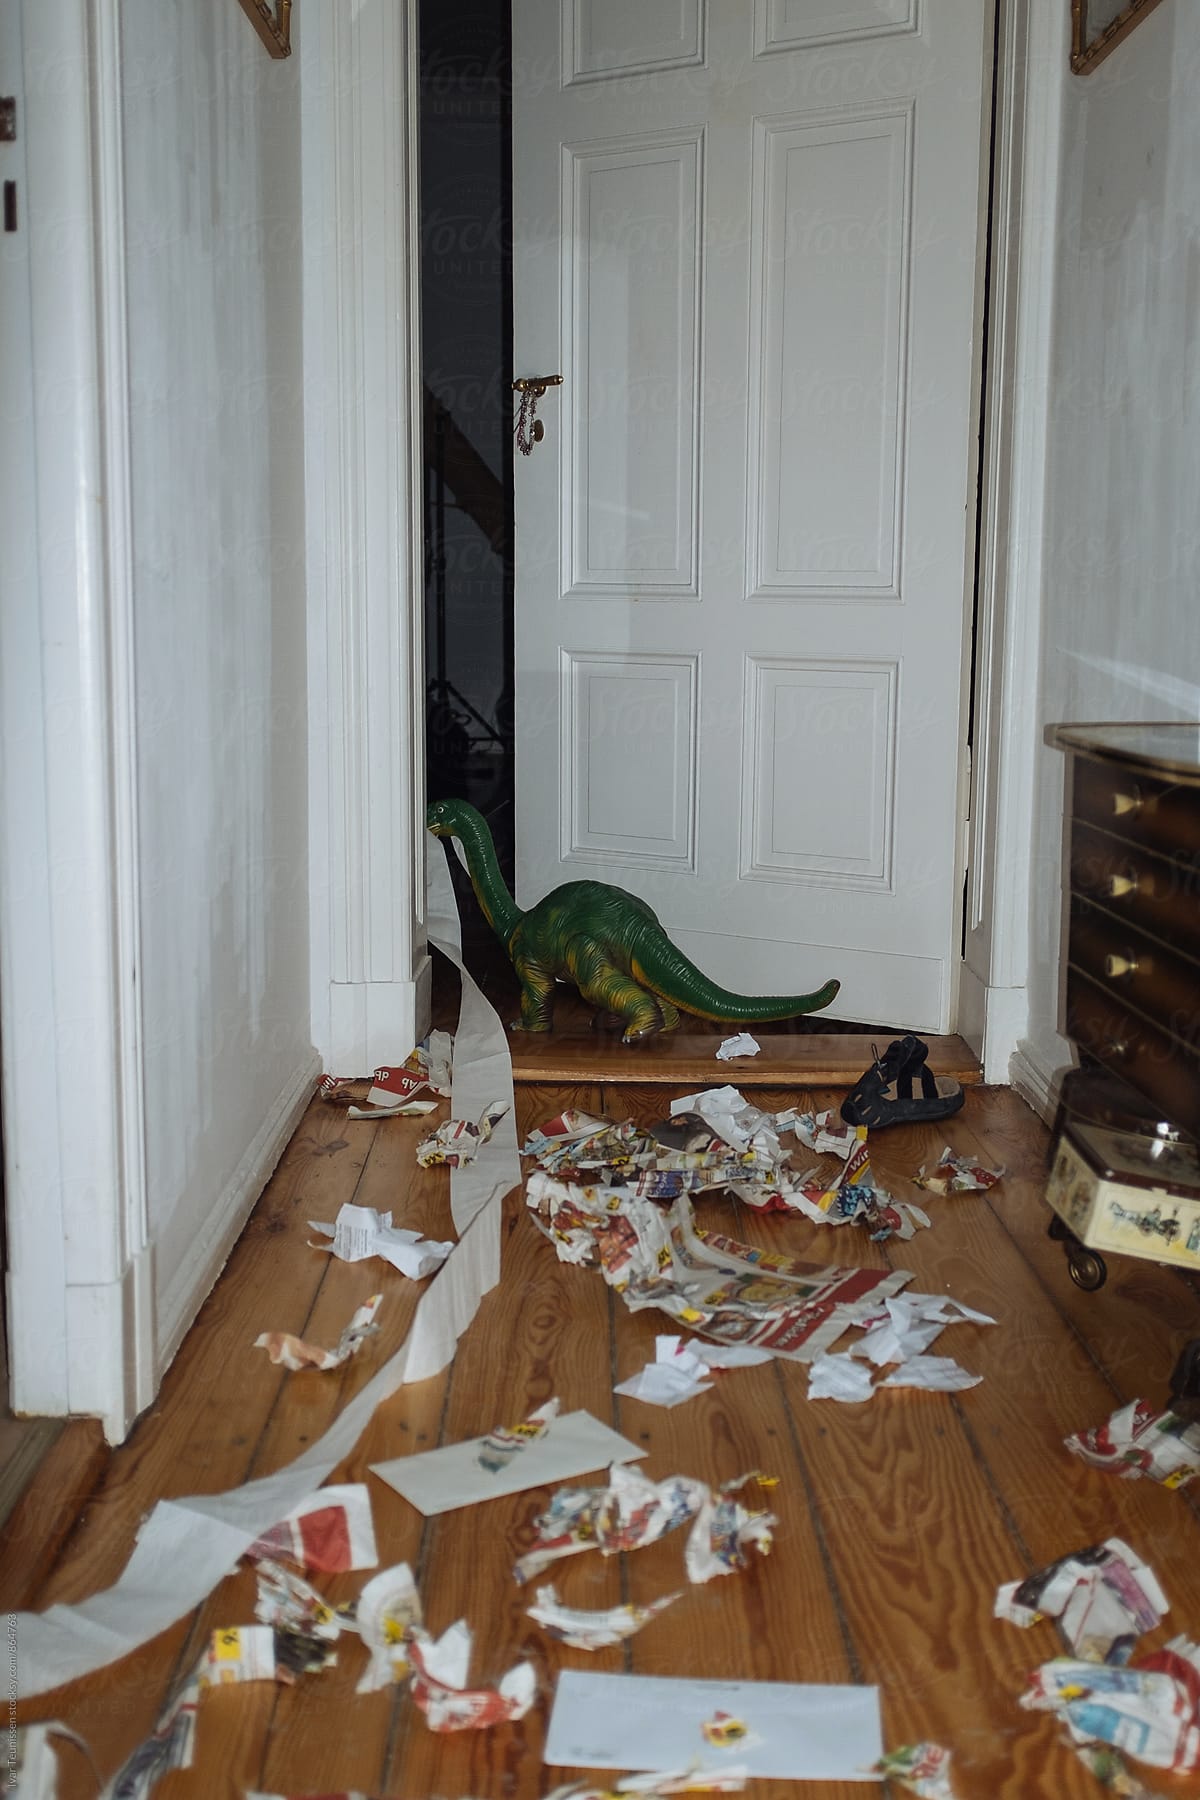 Rebellious dinosaur trashing up the hallway.